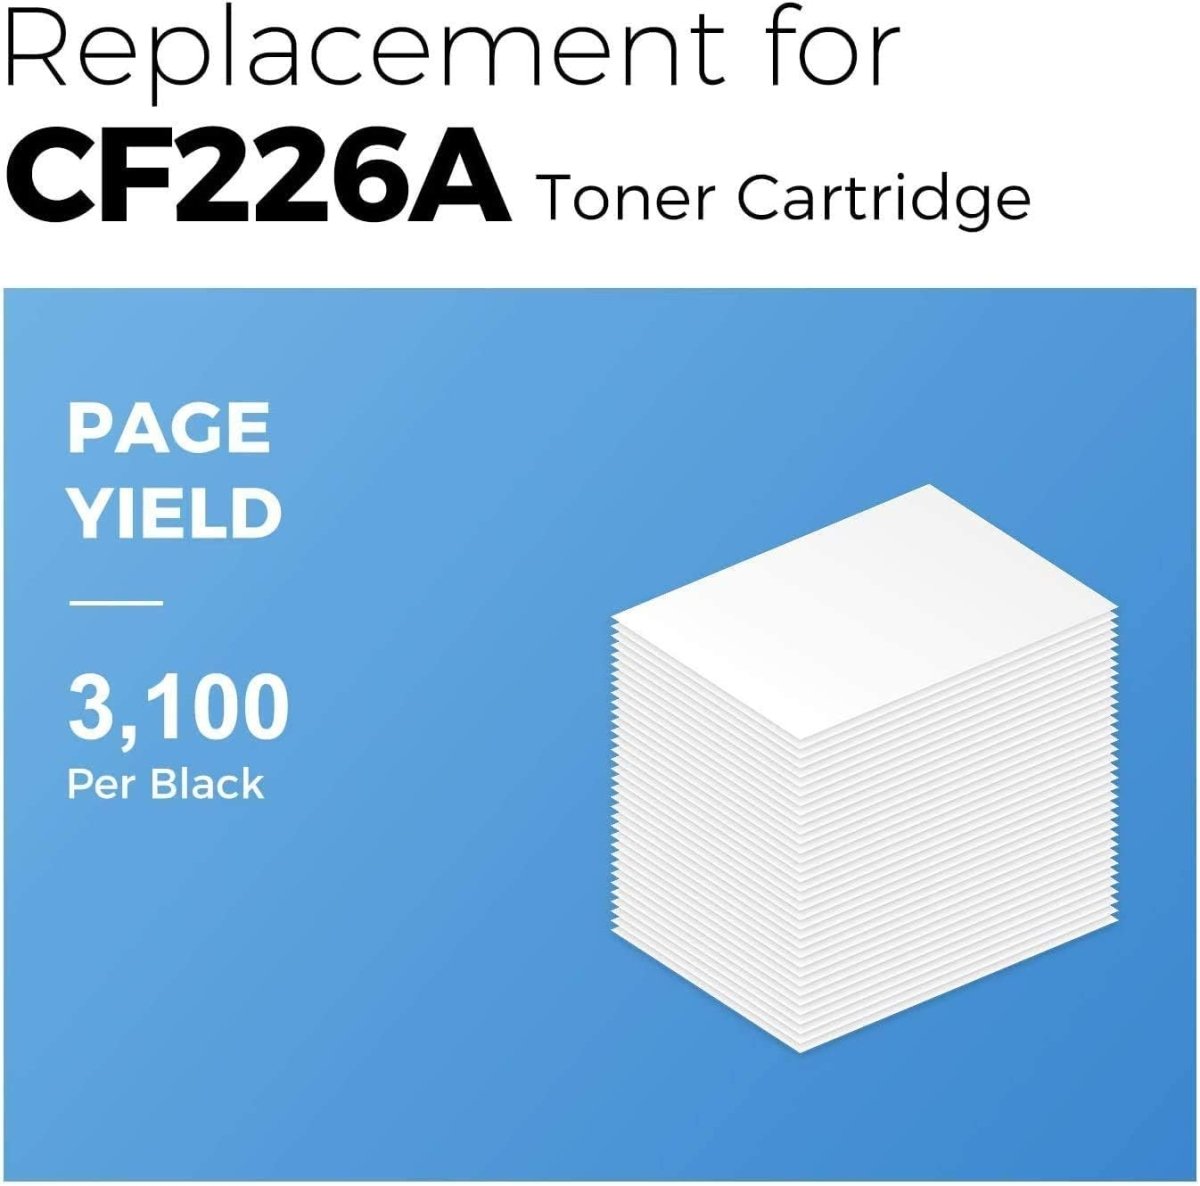 MYCARTRIDGE 26A Toner Cartridge Compatible Replacement for HP Printer 2 Pack Black CF226A Toner - Linford Office:Printer Ink & Toner Cartridge